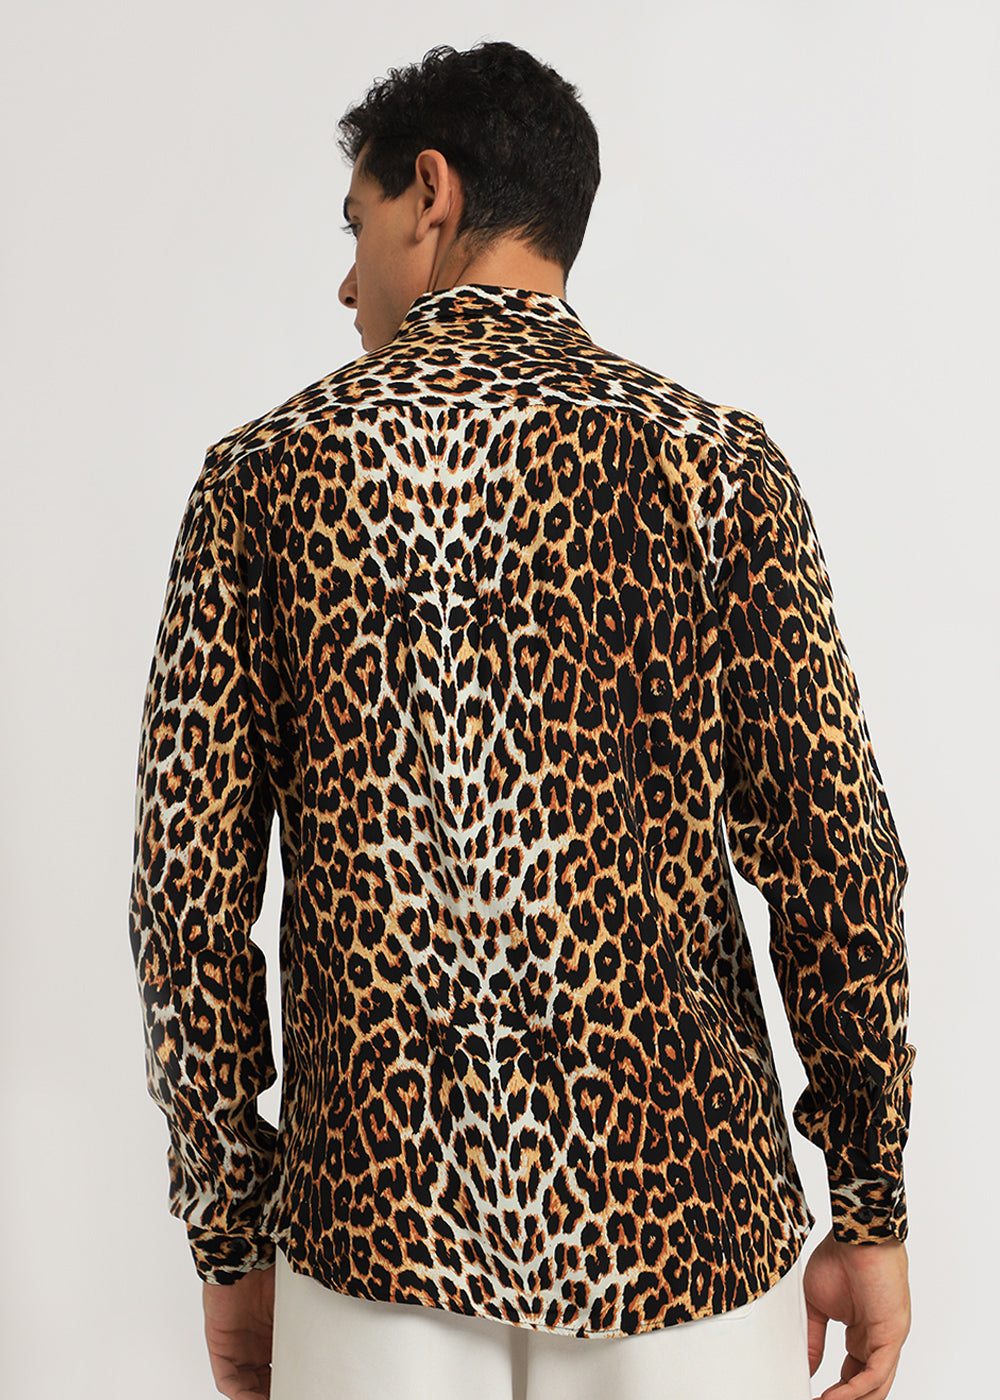 Leopard Print Full sleeve shirt